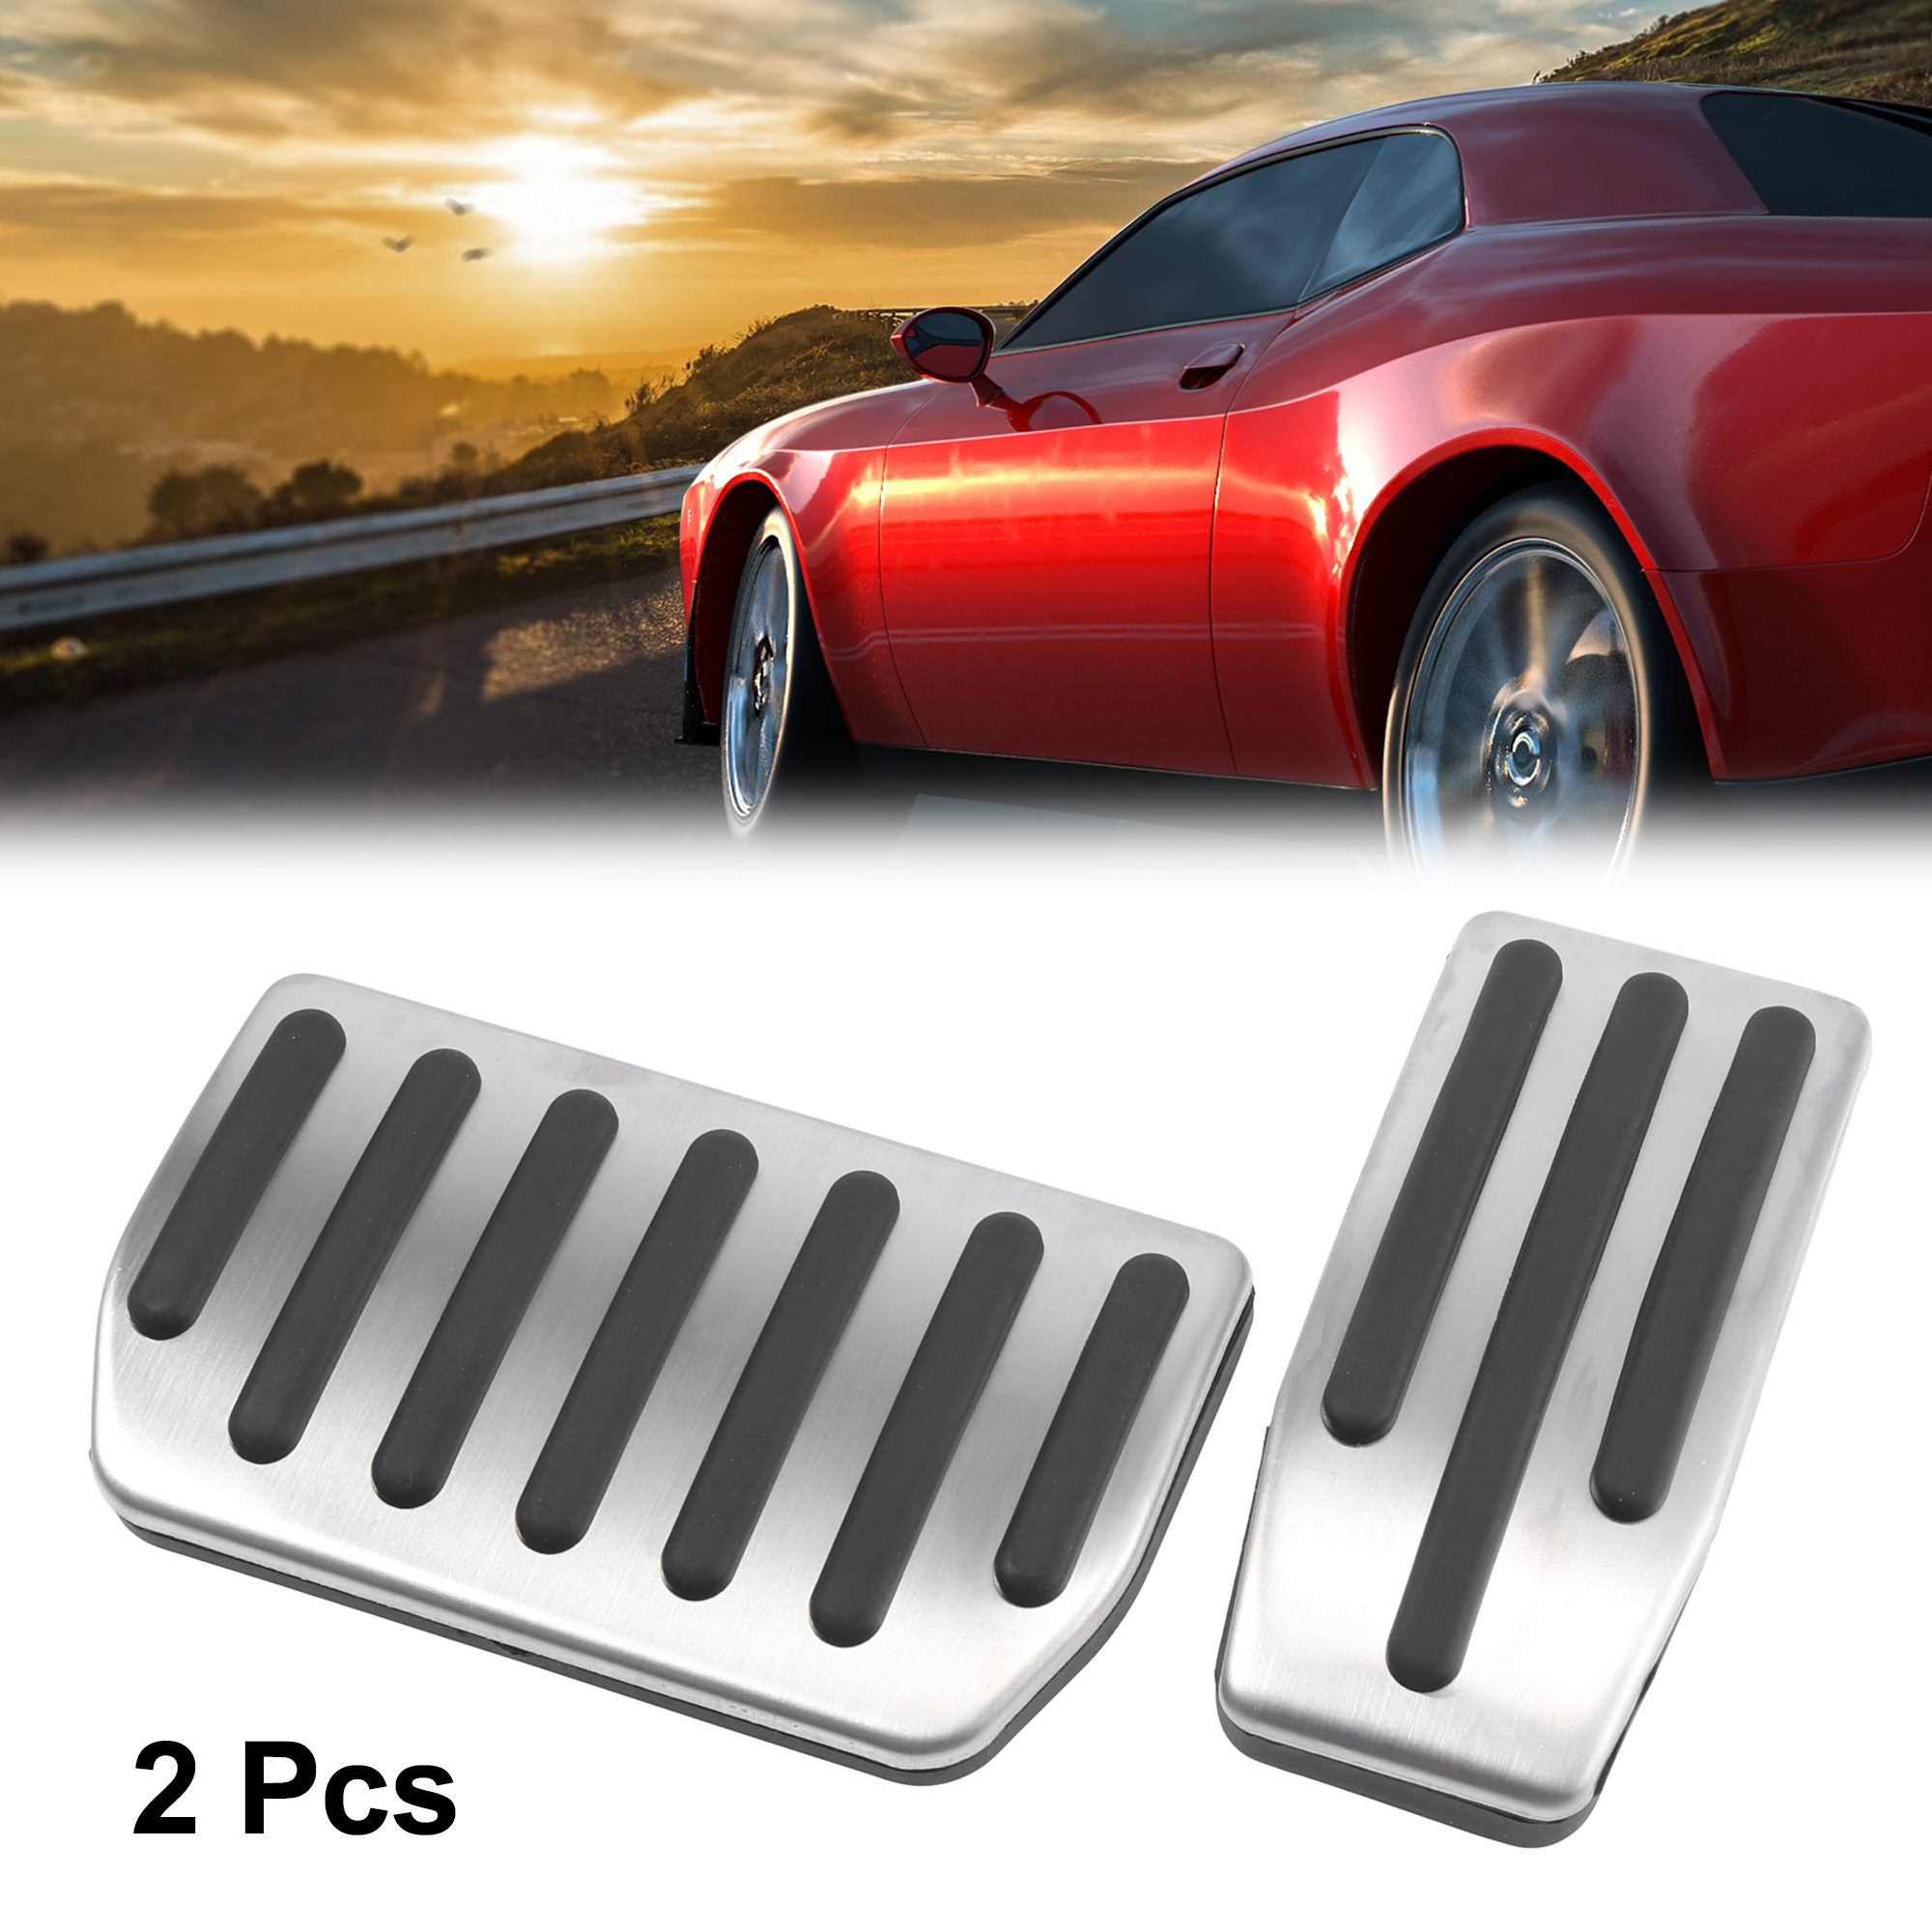 Unique Bargains 2 Pcs Car Anti-Slip Brake Gas Pedal Pad Covers for Tesla